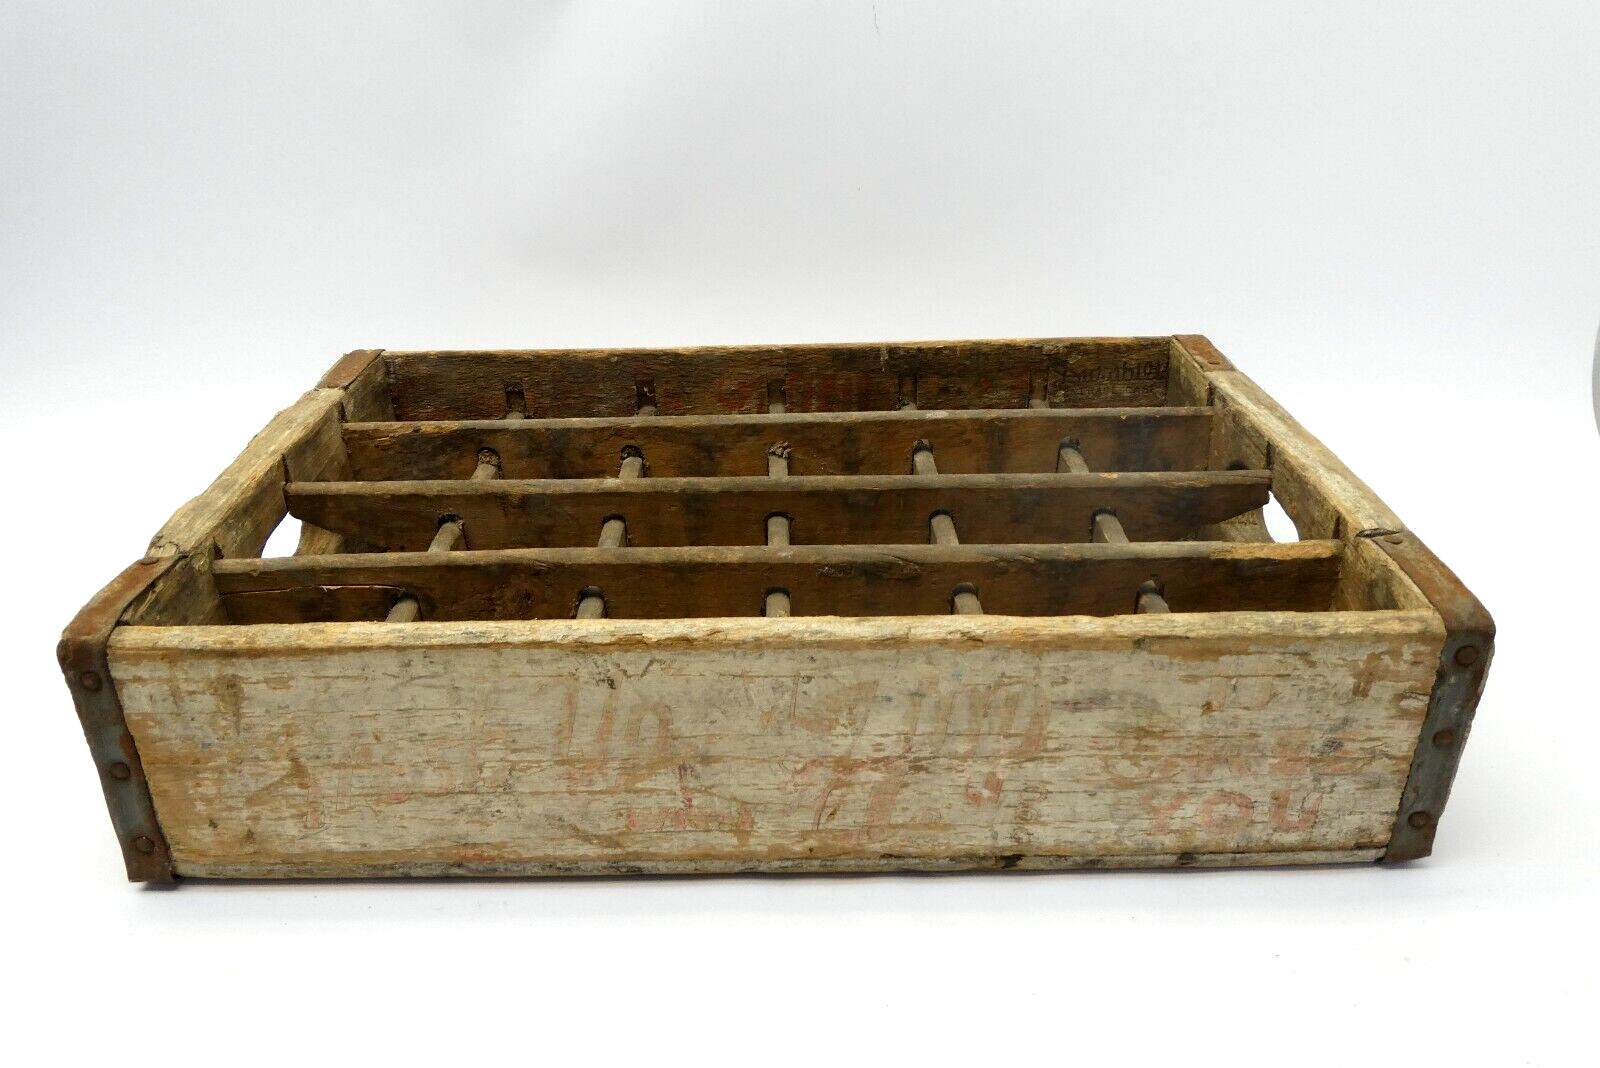 7-Up Durabilt Beverage Case 1952 Illinois Glass Company Shipping Crate Box